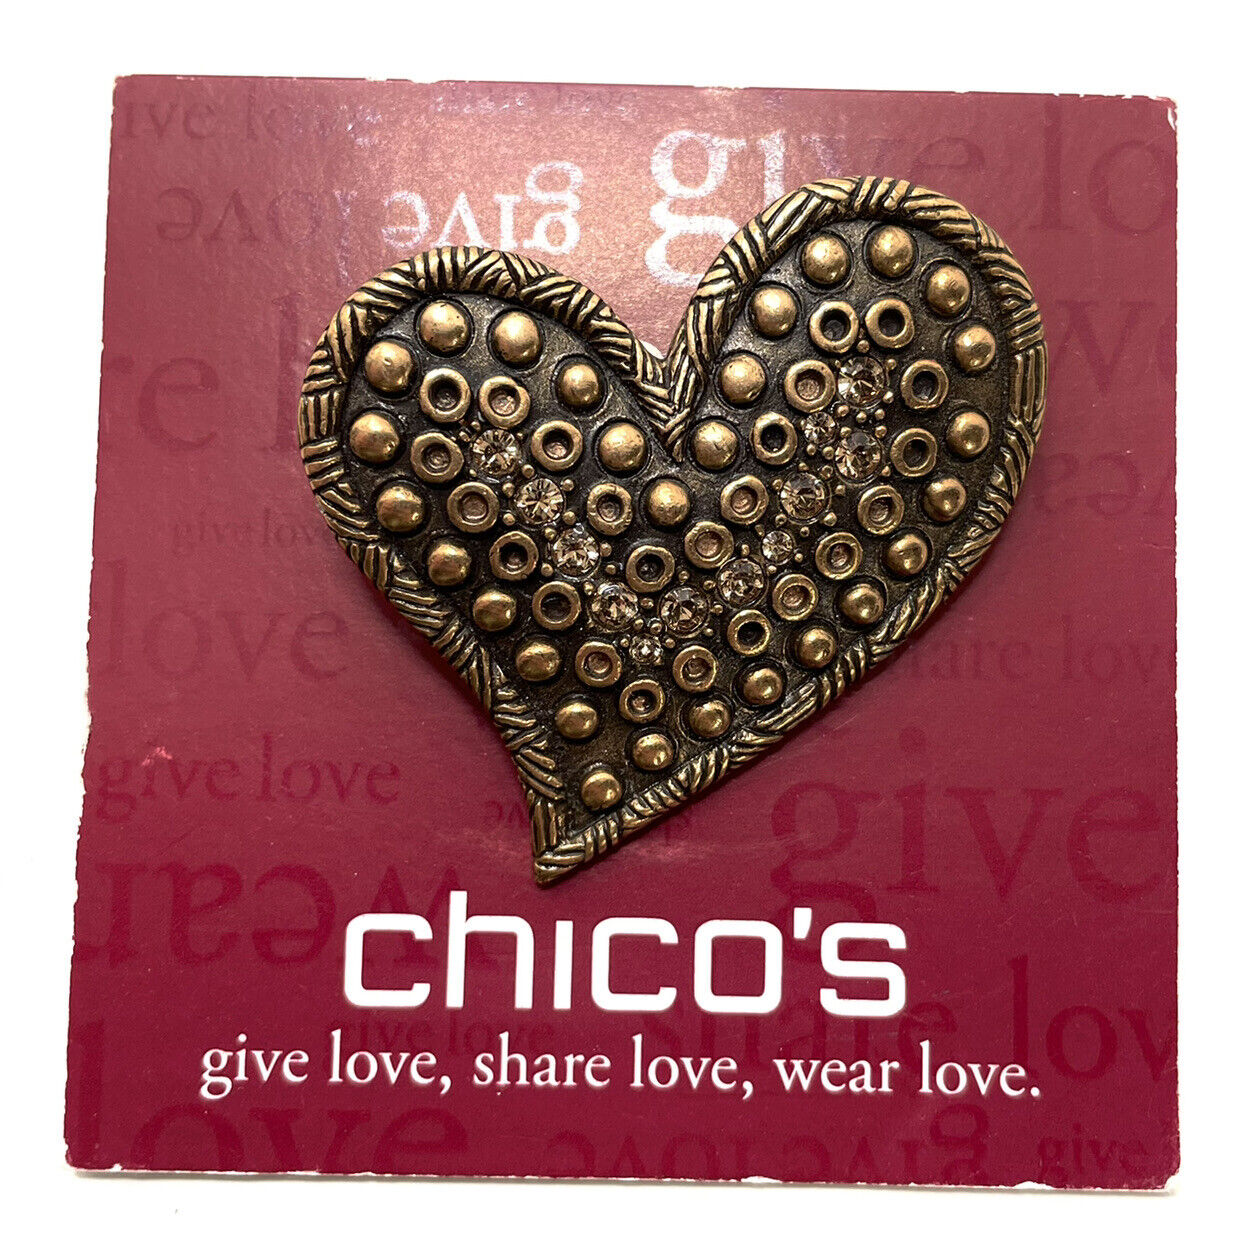 Chico’s Heart Pin